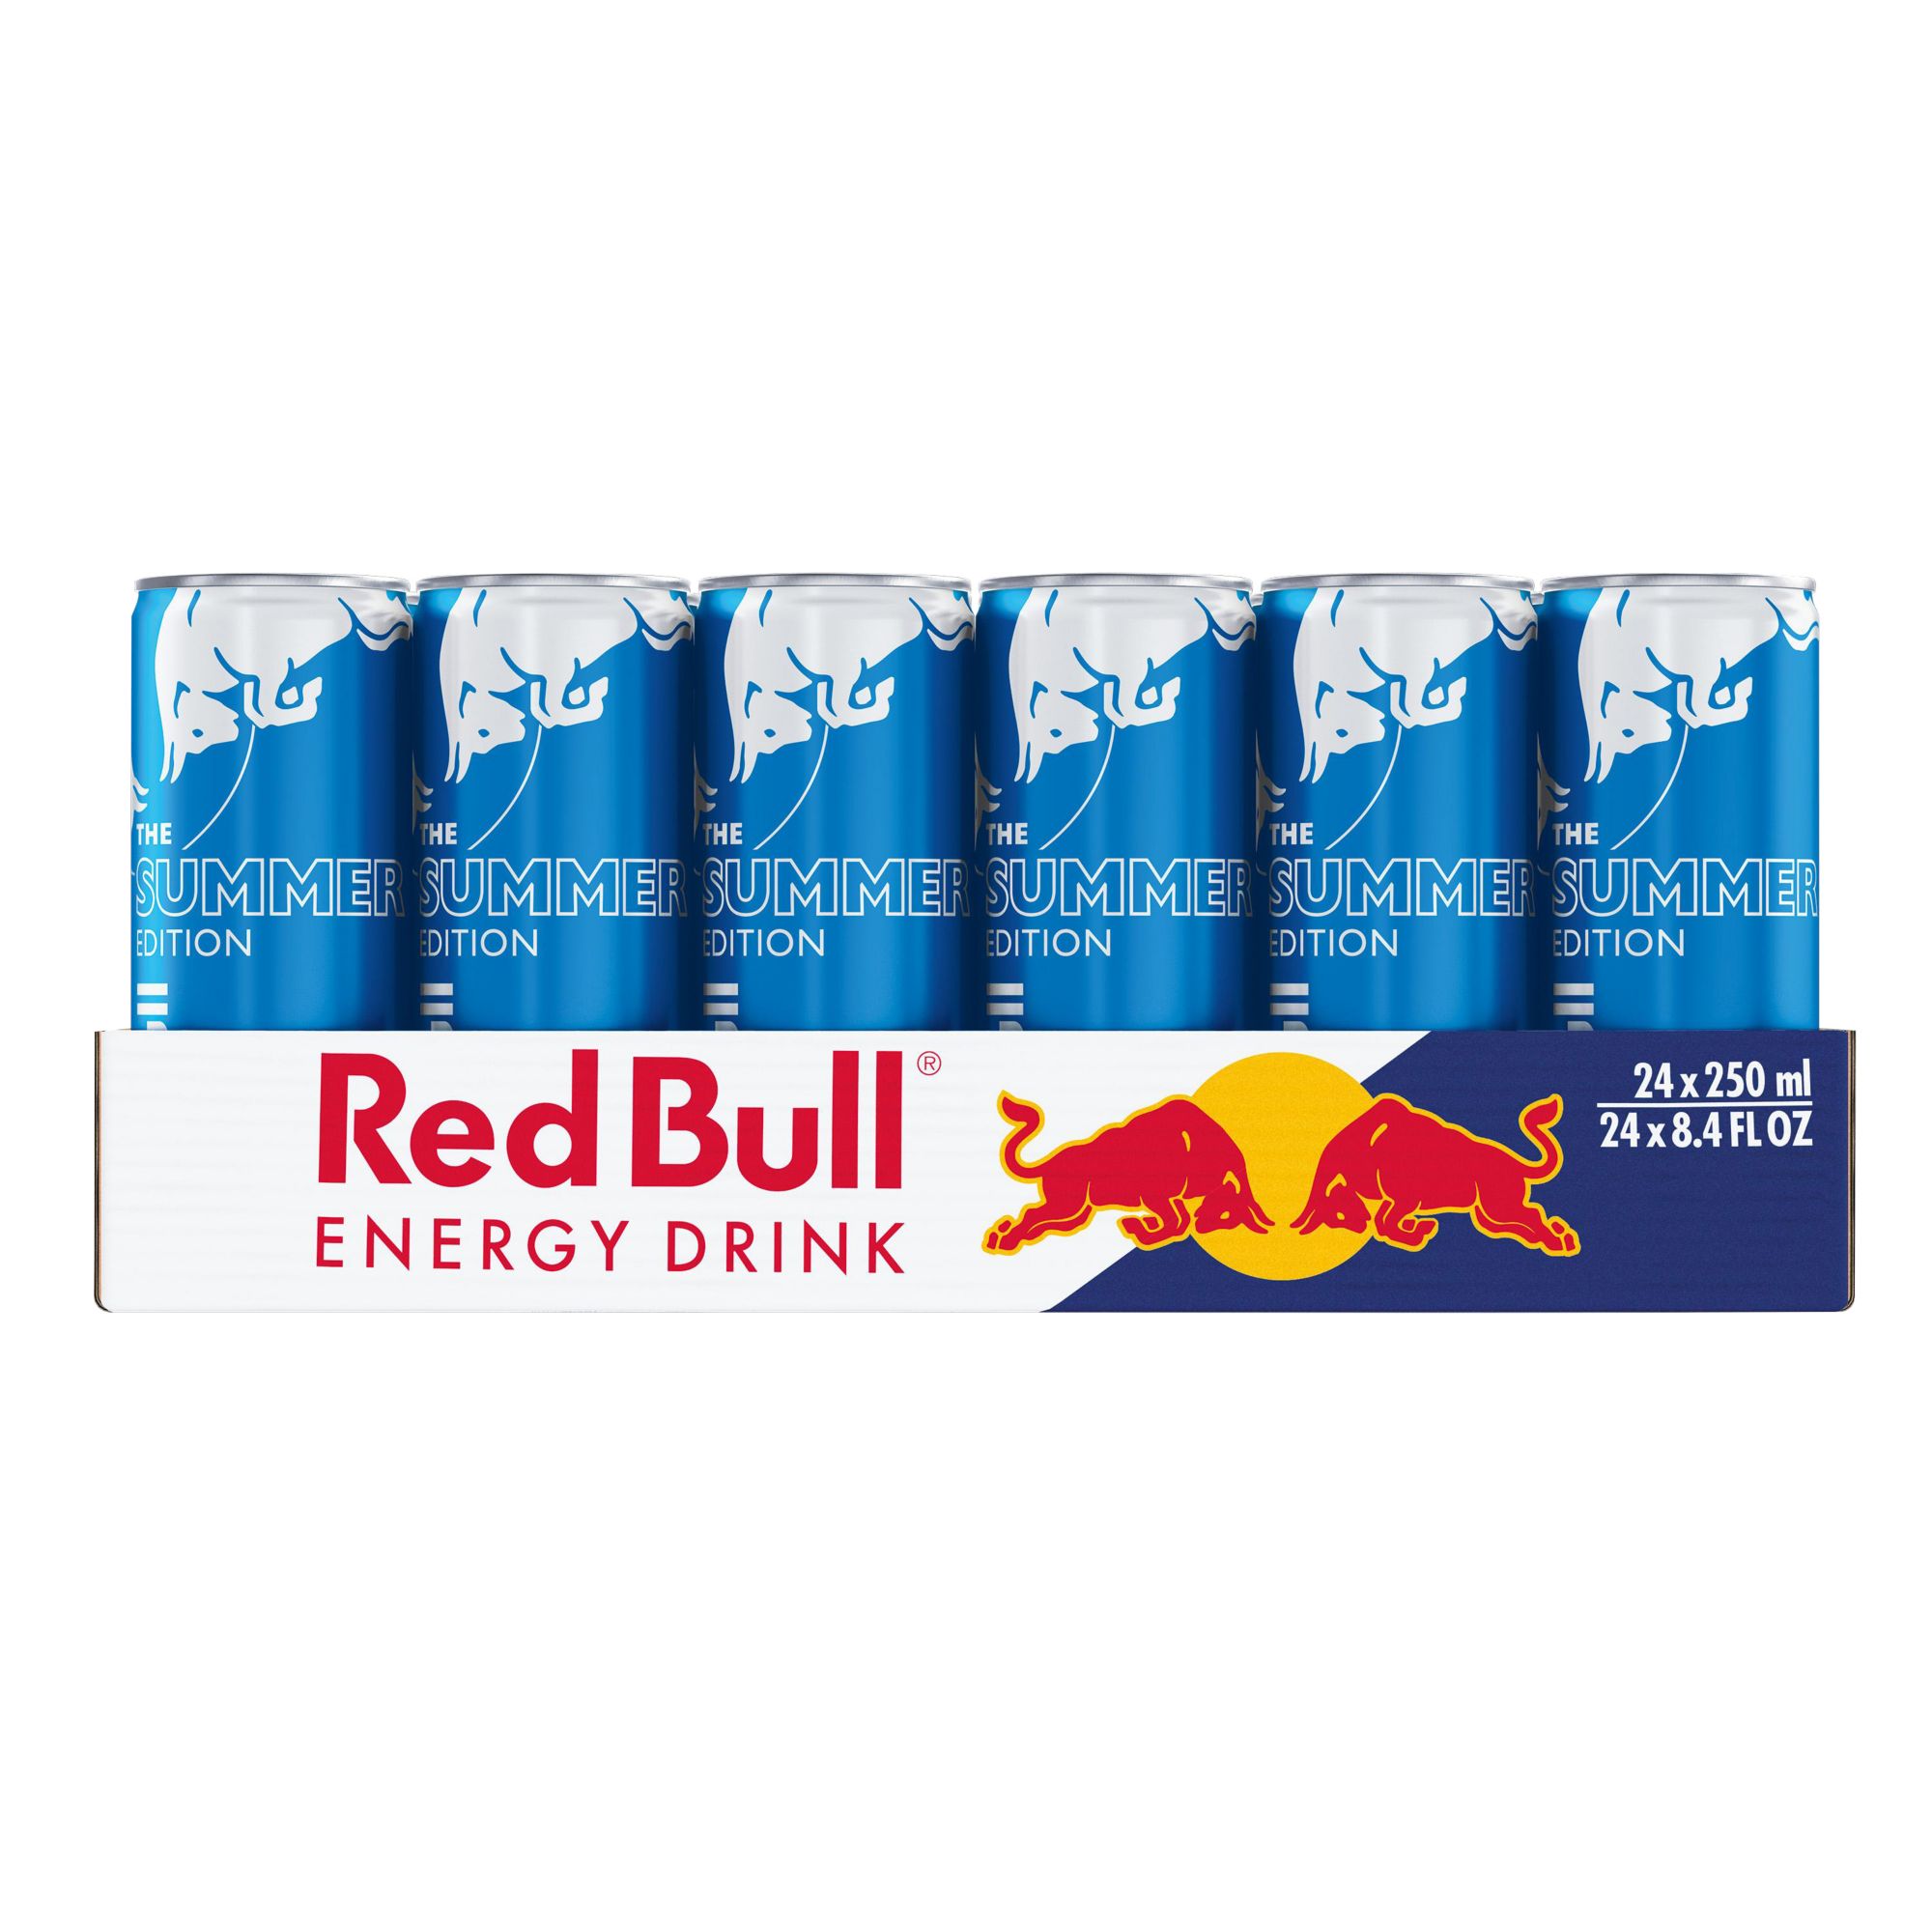 Red Bull Sea Blue Edition Juneberry Energy Drink, 24 pk./8.4 oz.